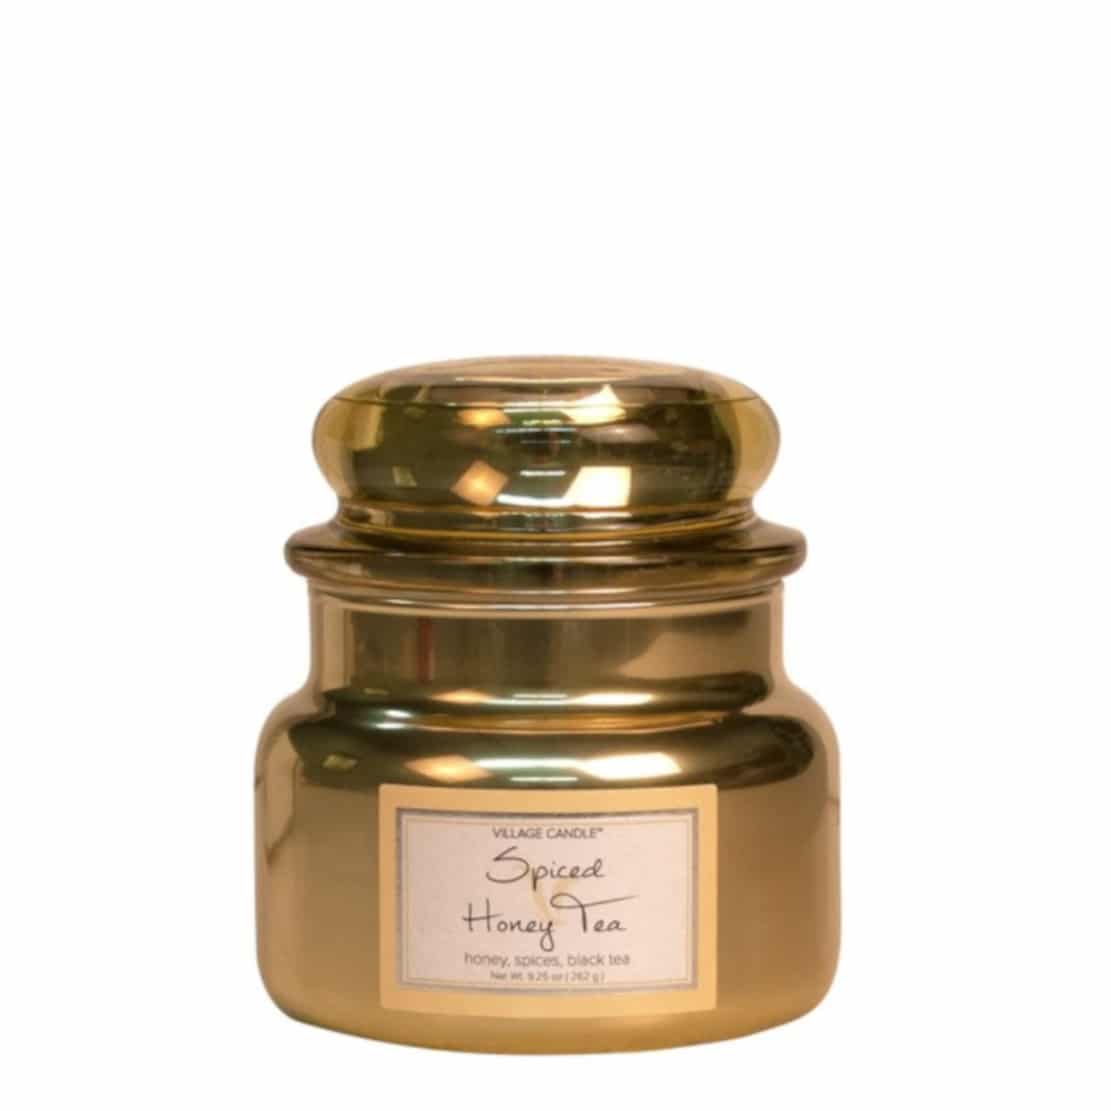 Village Candle Spiced Honey Tea Small Jar 262g